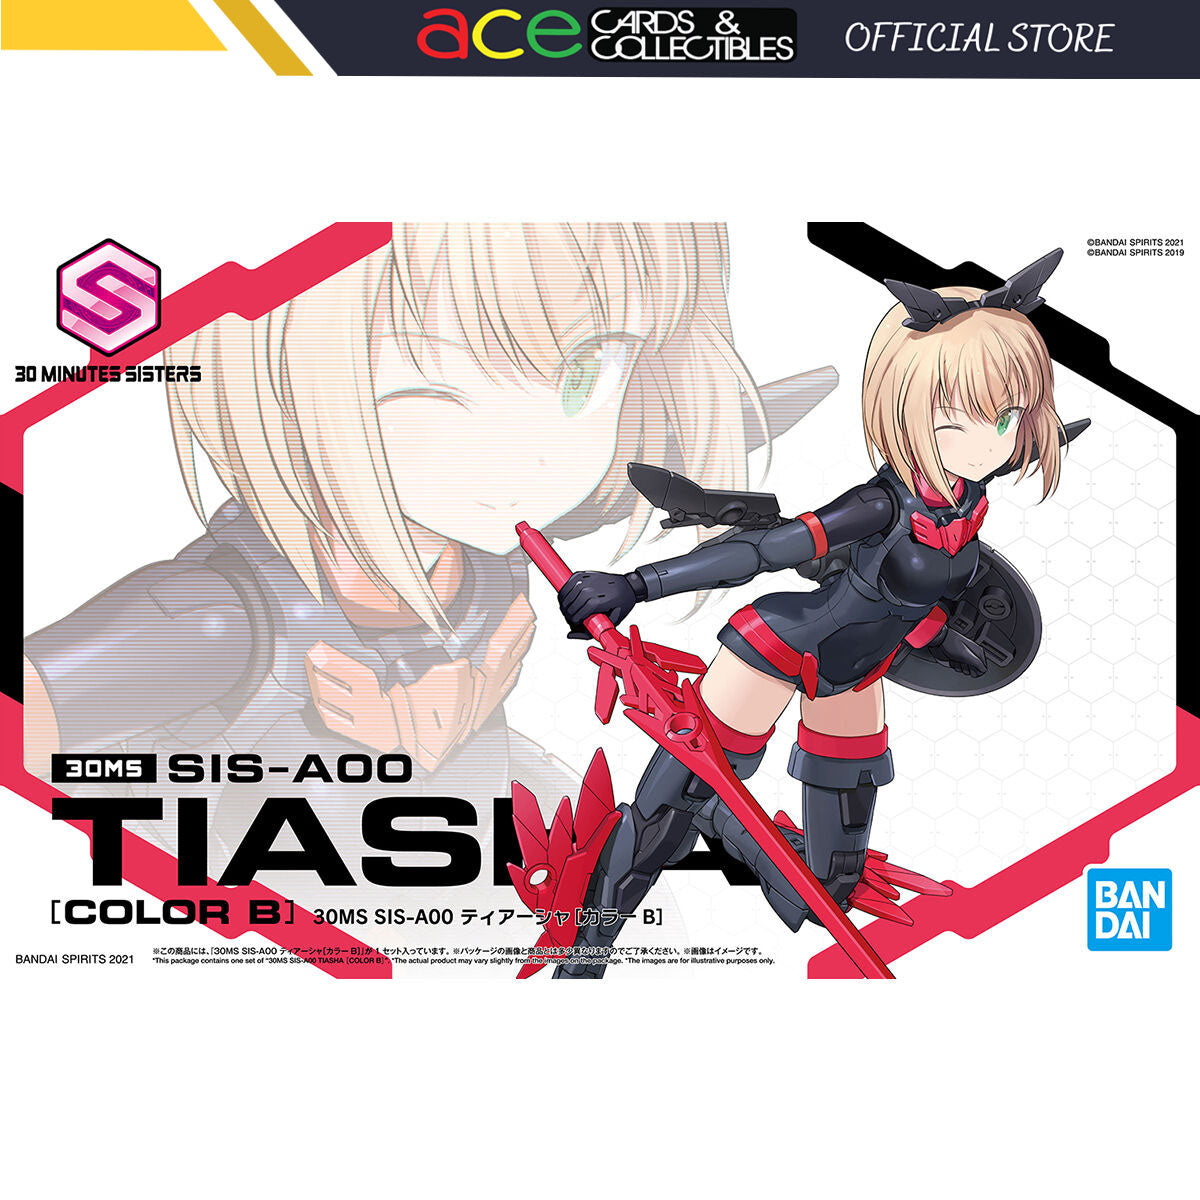 30MS SIS-A00 Tiasha [Color B]-Bandai-Ace Cards & Collectibles